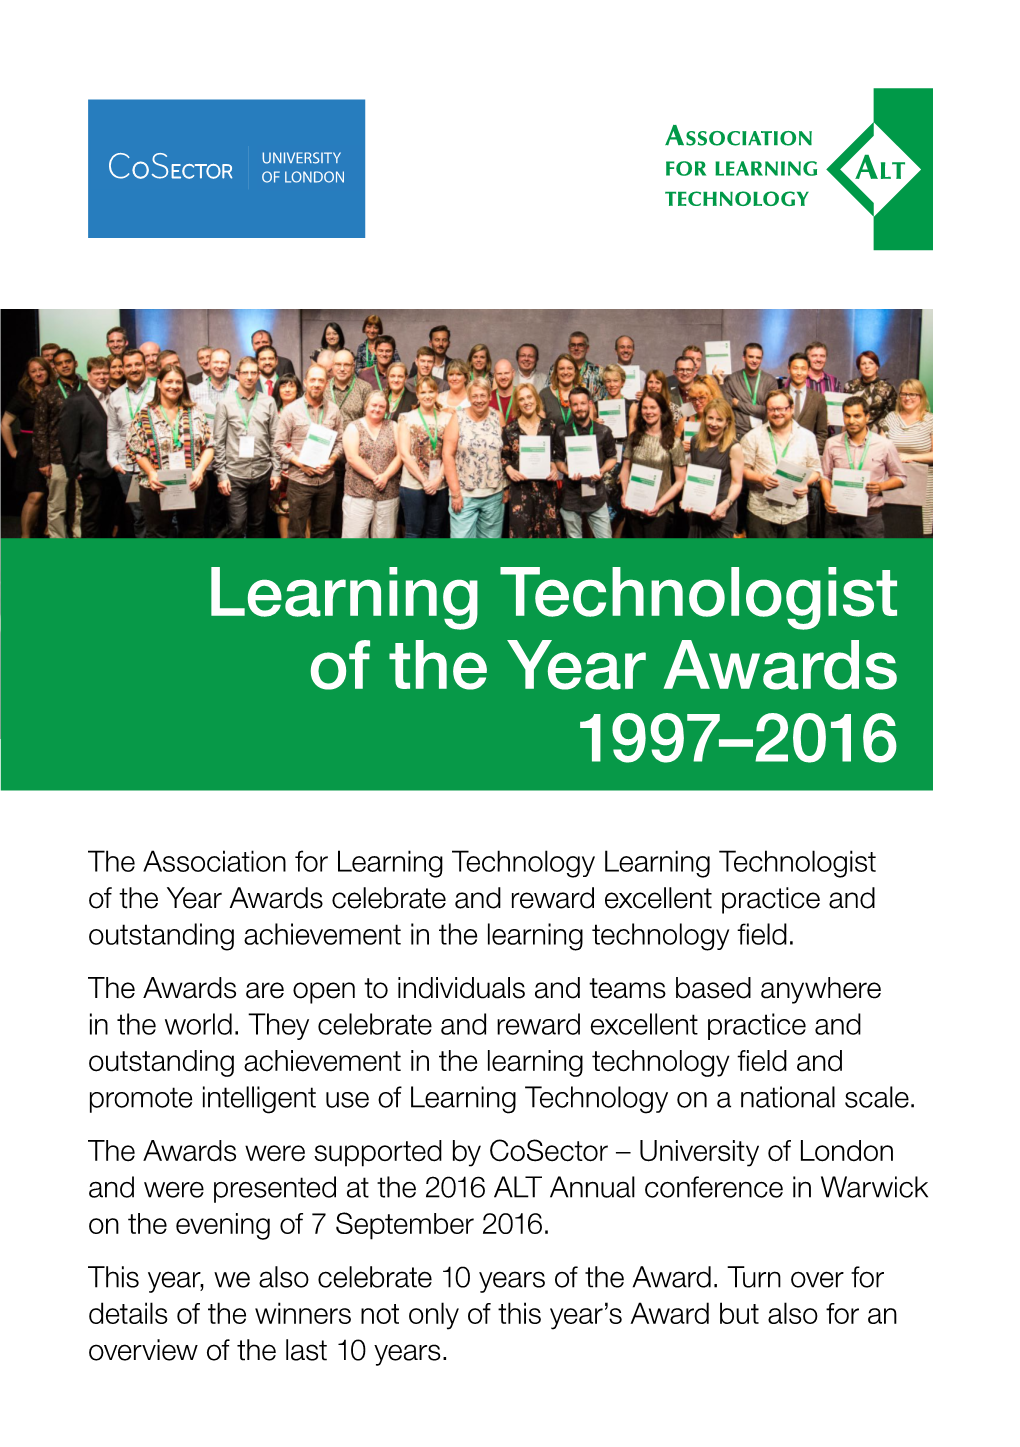 Learning Technologist Award 2014